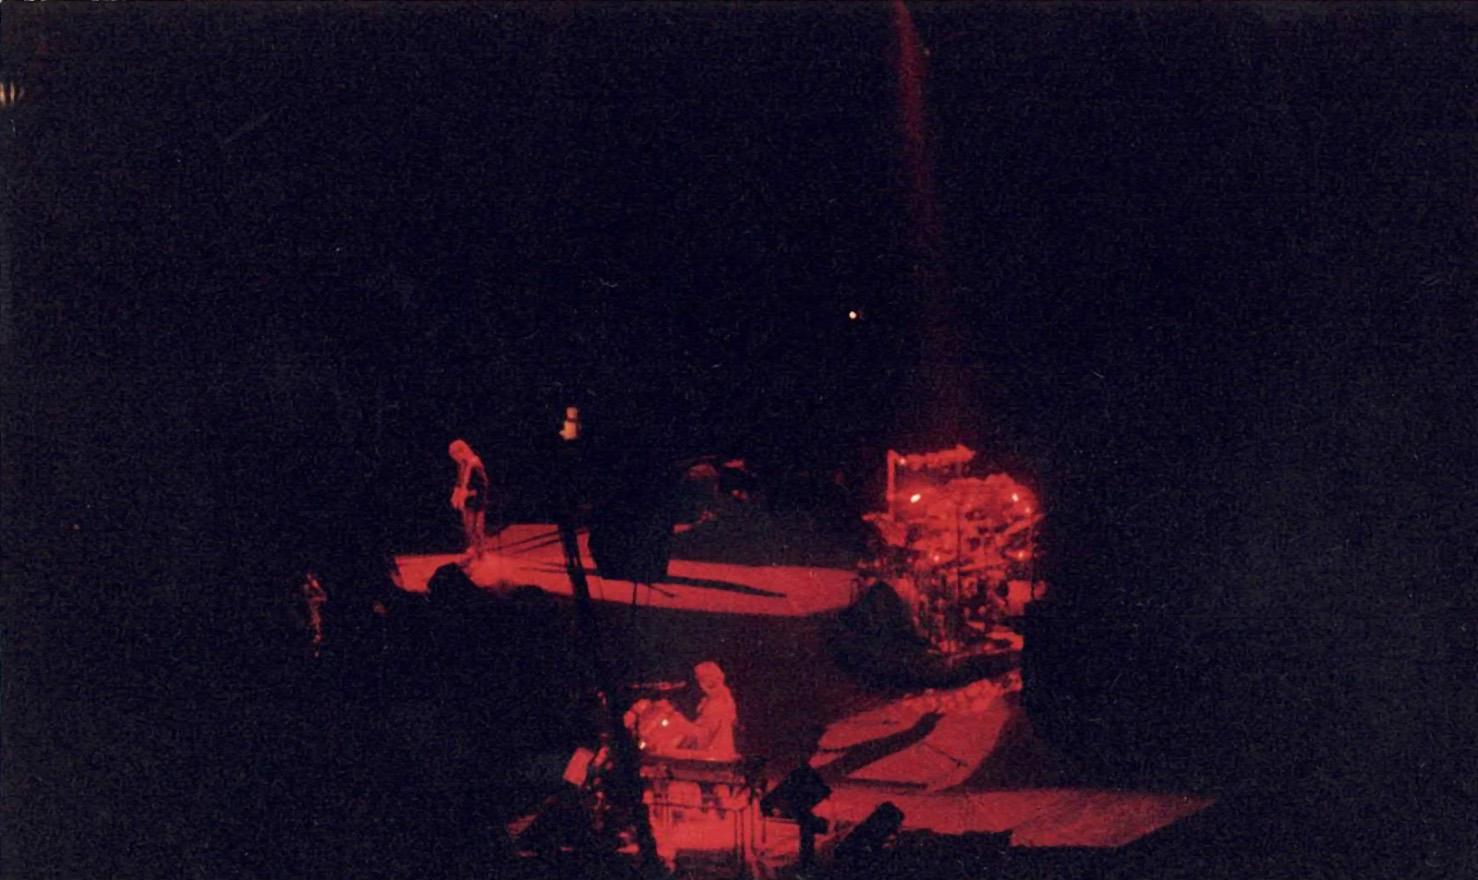 Rush 'Power Windows' Tour Pictures - The Spectrum - Philadelphia, Pennsylvania - April 14th, 1986